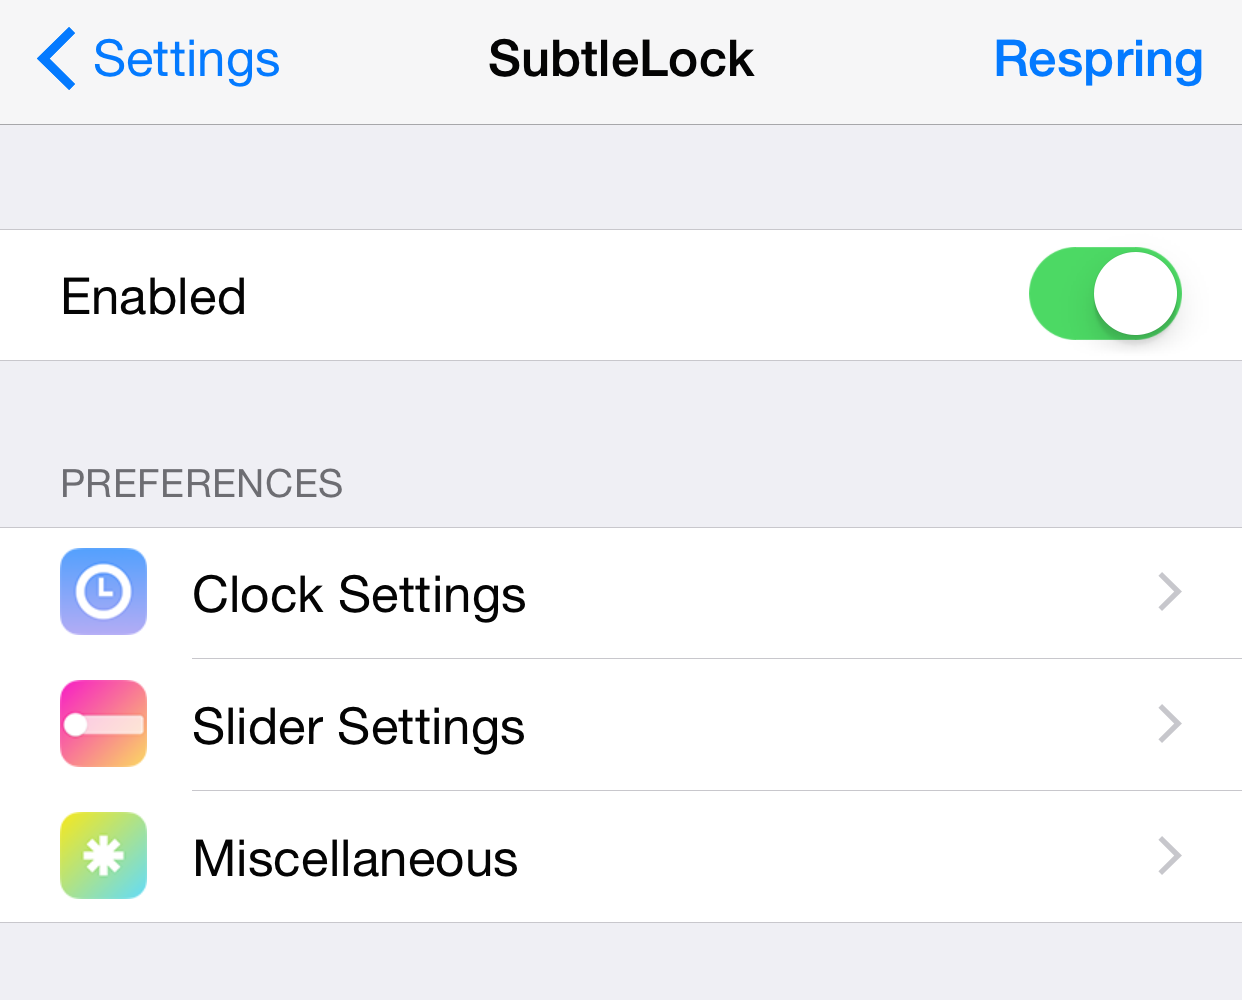 SubtleLock settings